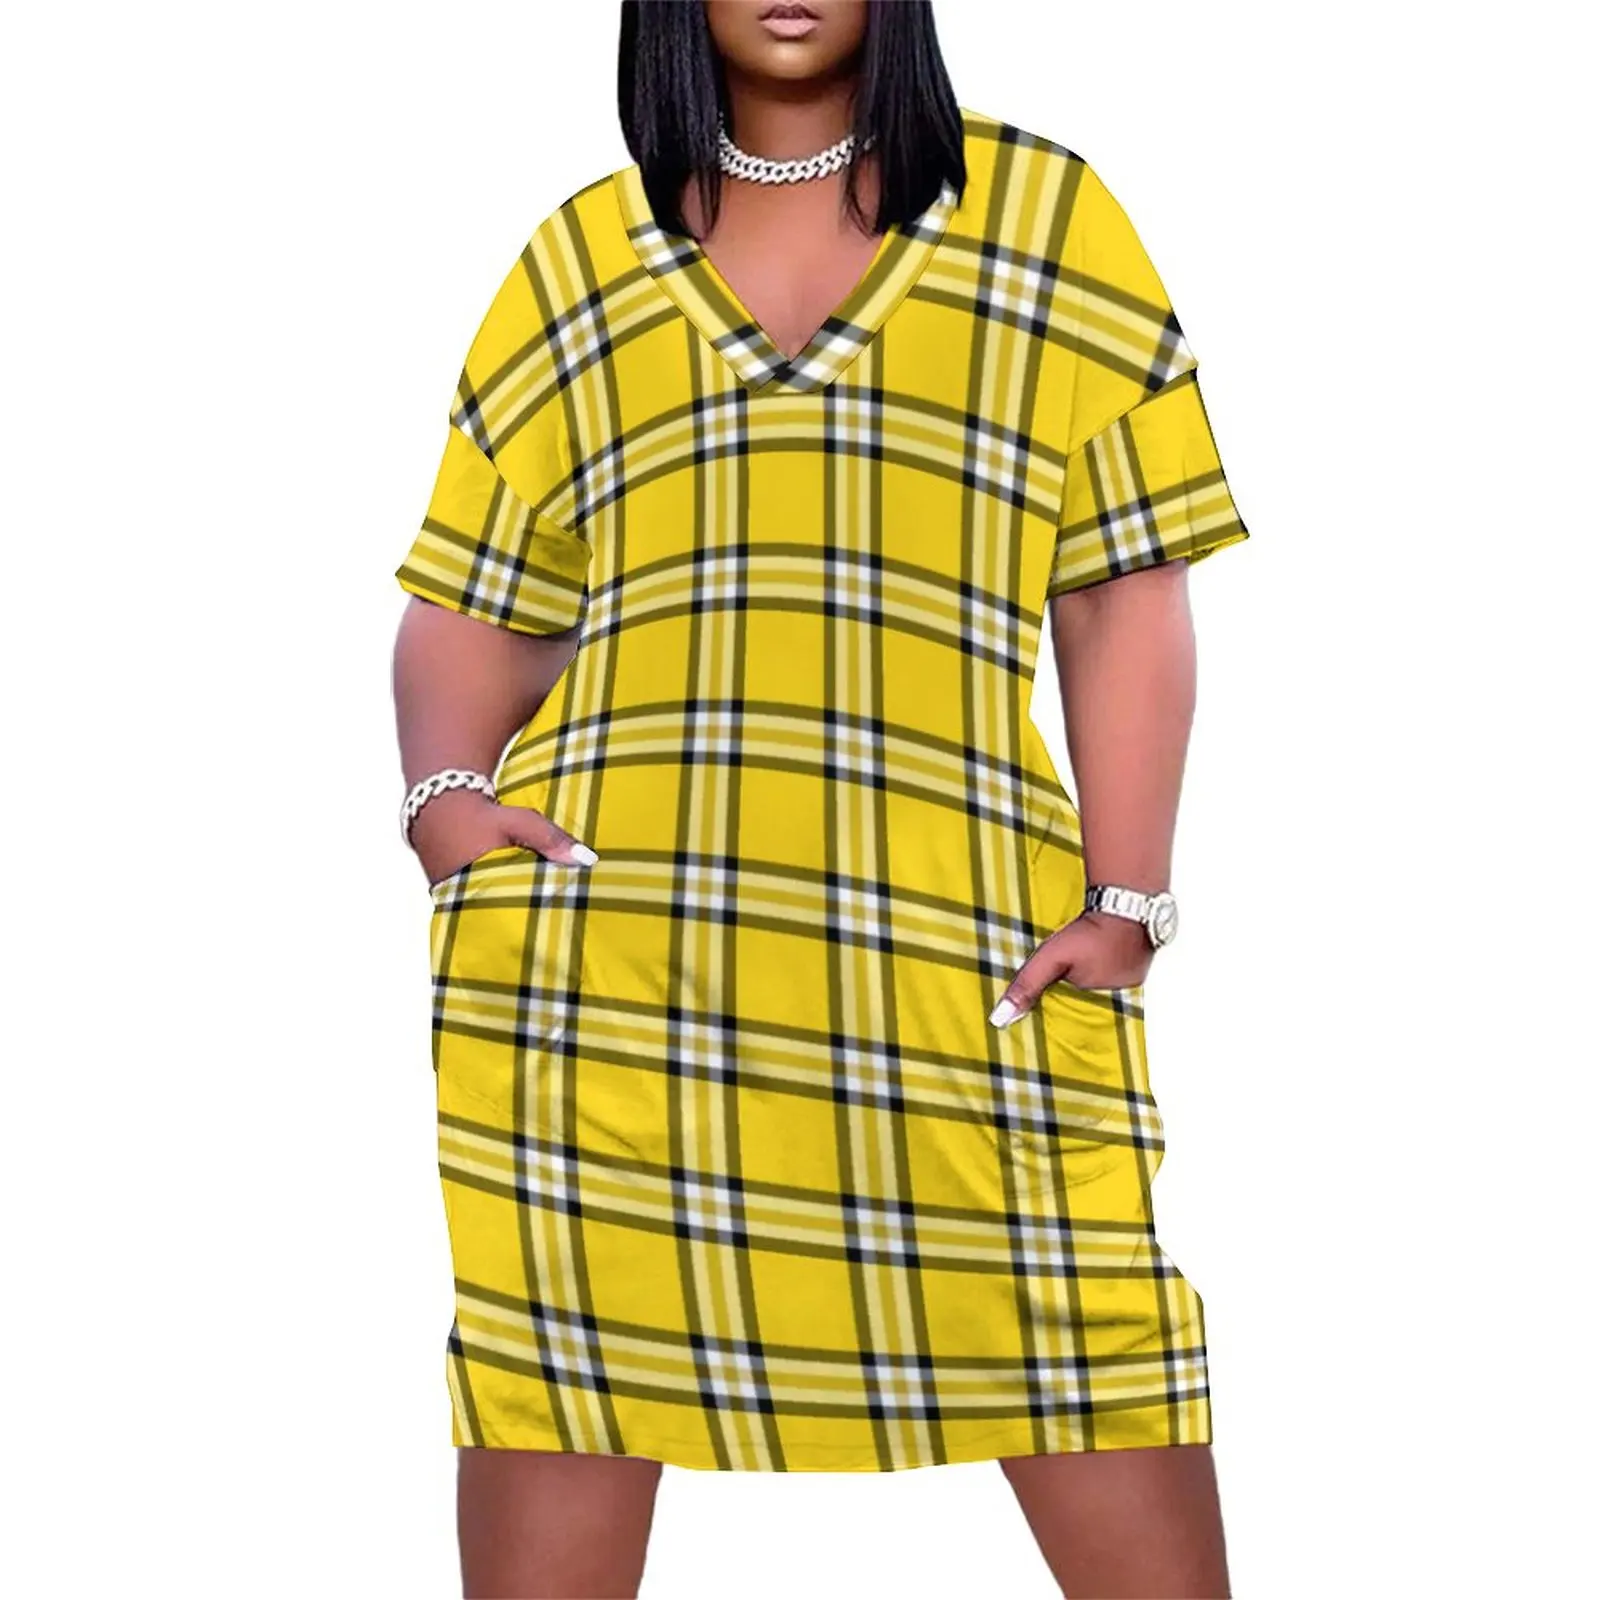 Yellow Plaid Tartan Casual Dress Women Retro Print Cute Dresses Summer Short Sleeve Aesthetic Graphic Dress Plus Size 4XL 5XL